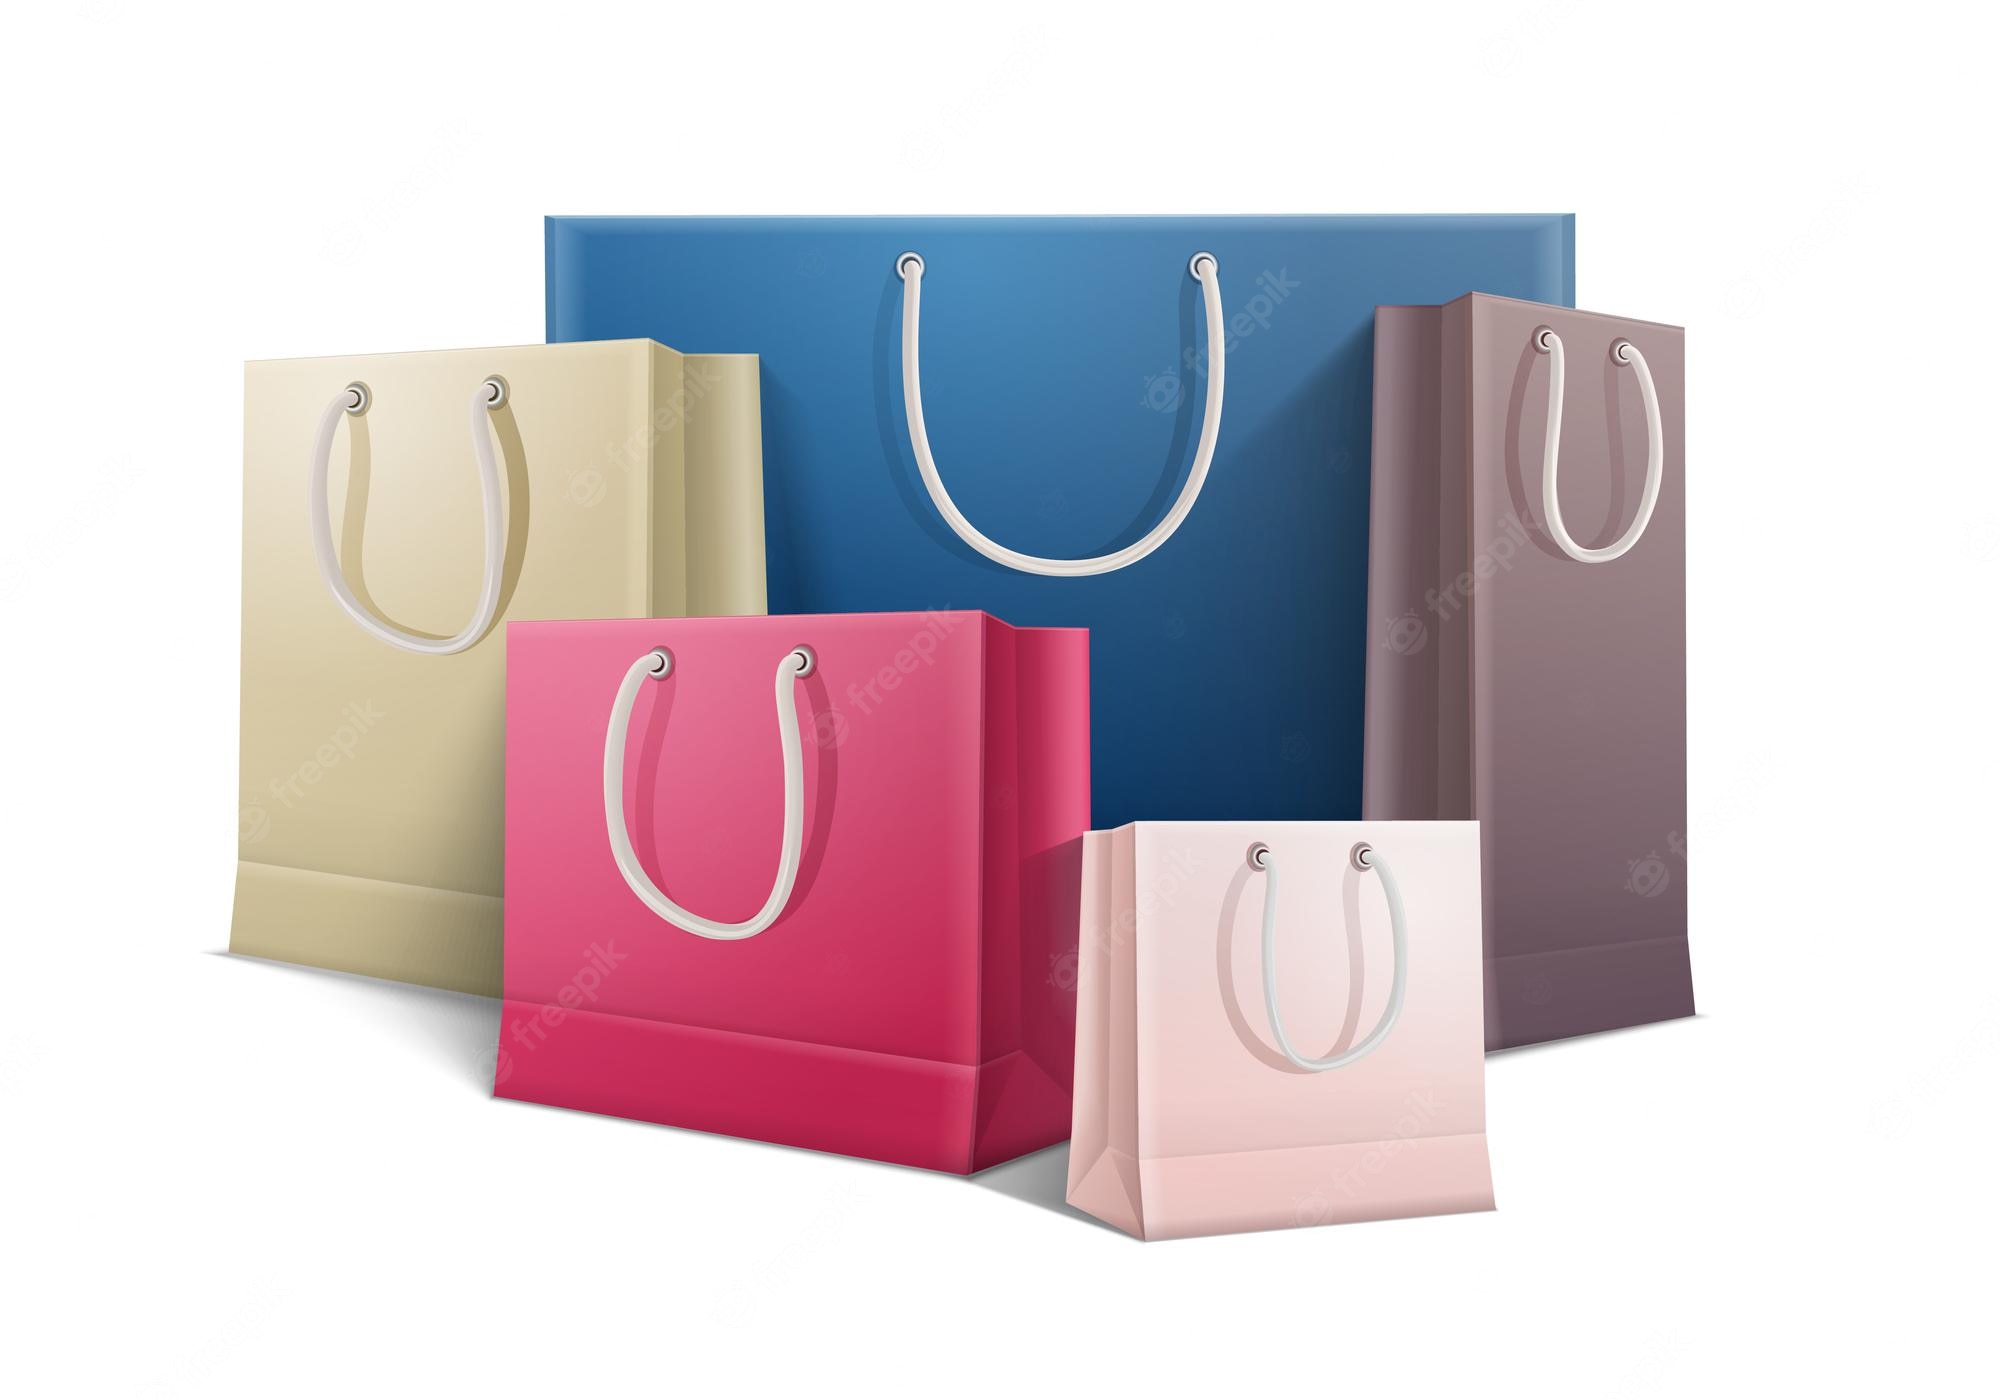 Shopping Bags Image. Free Vectors, & PSD